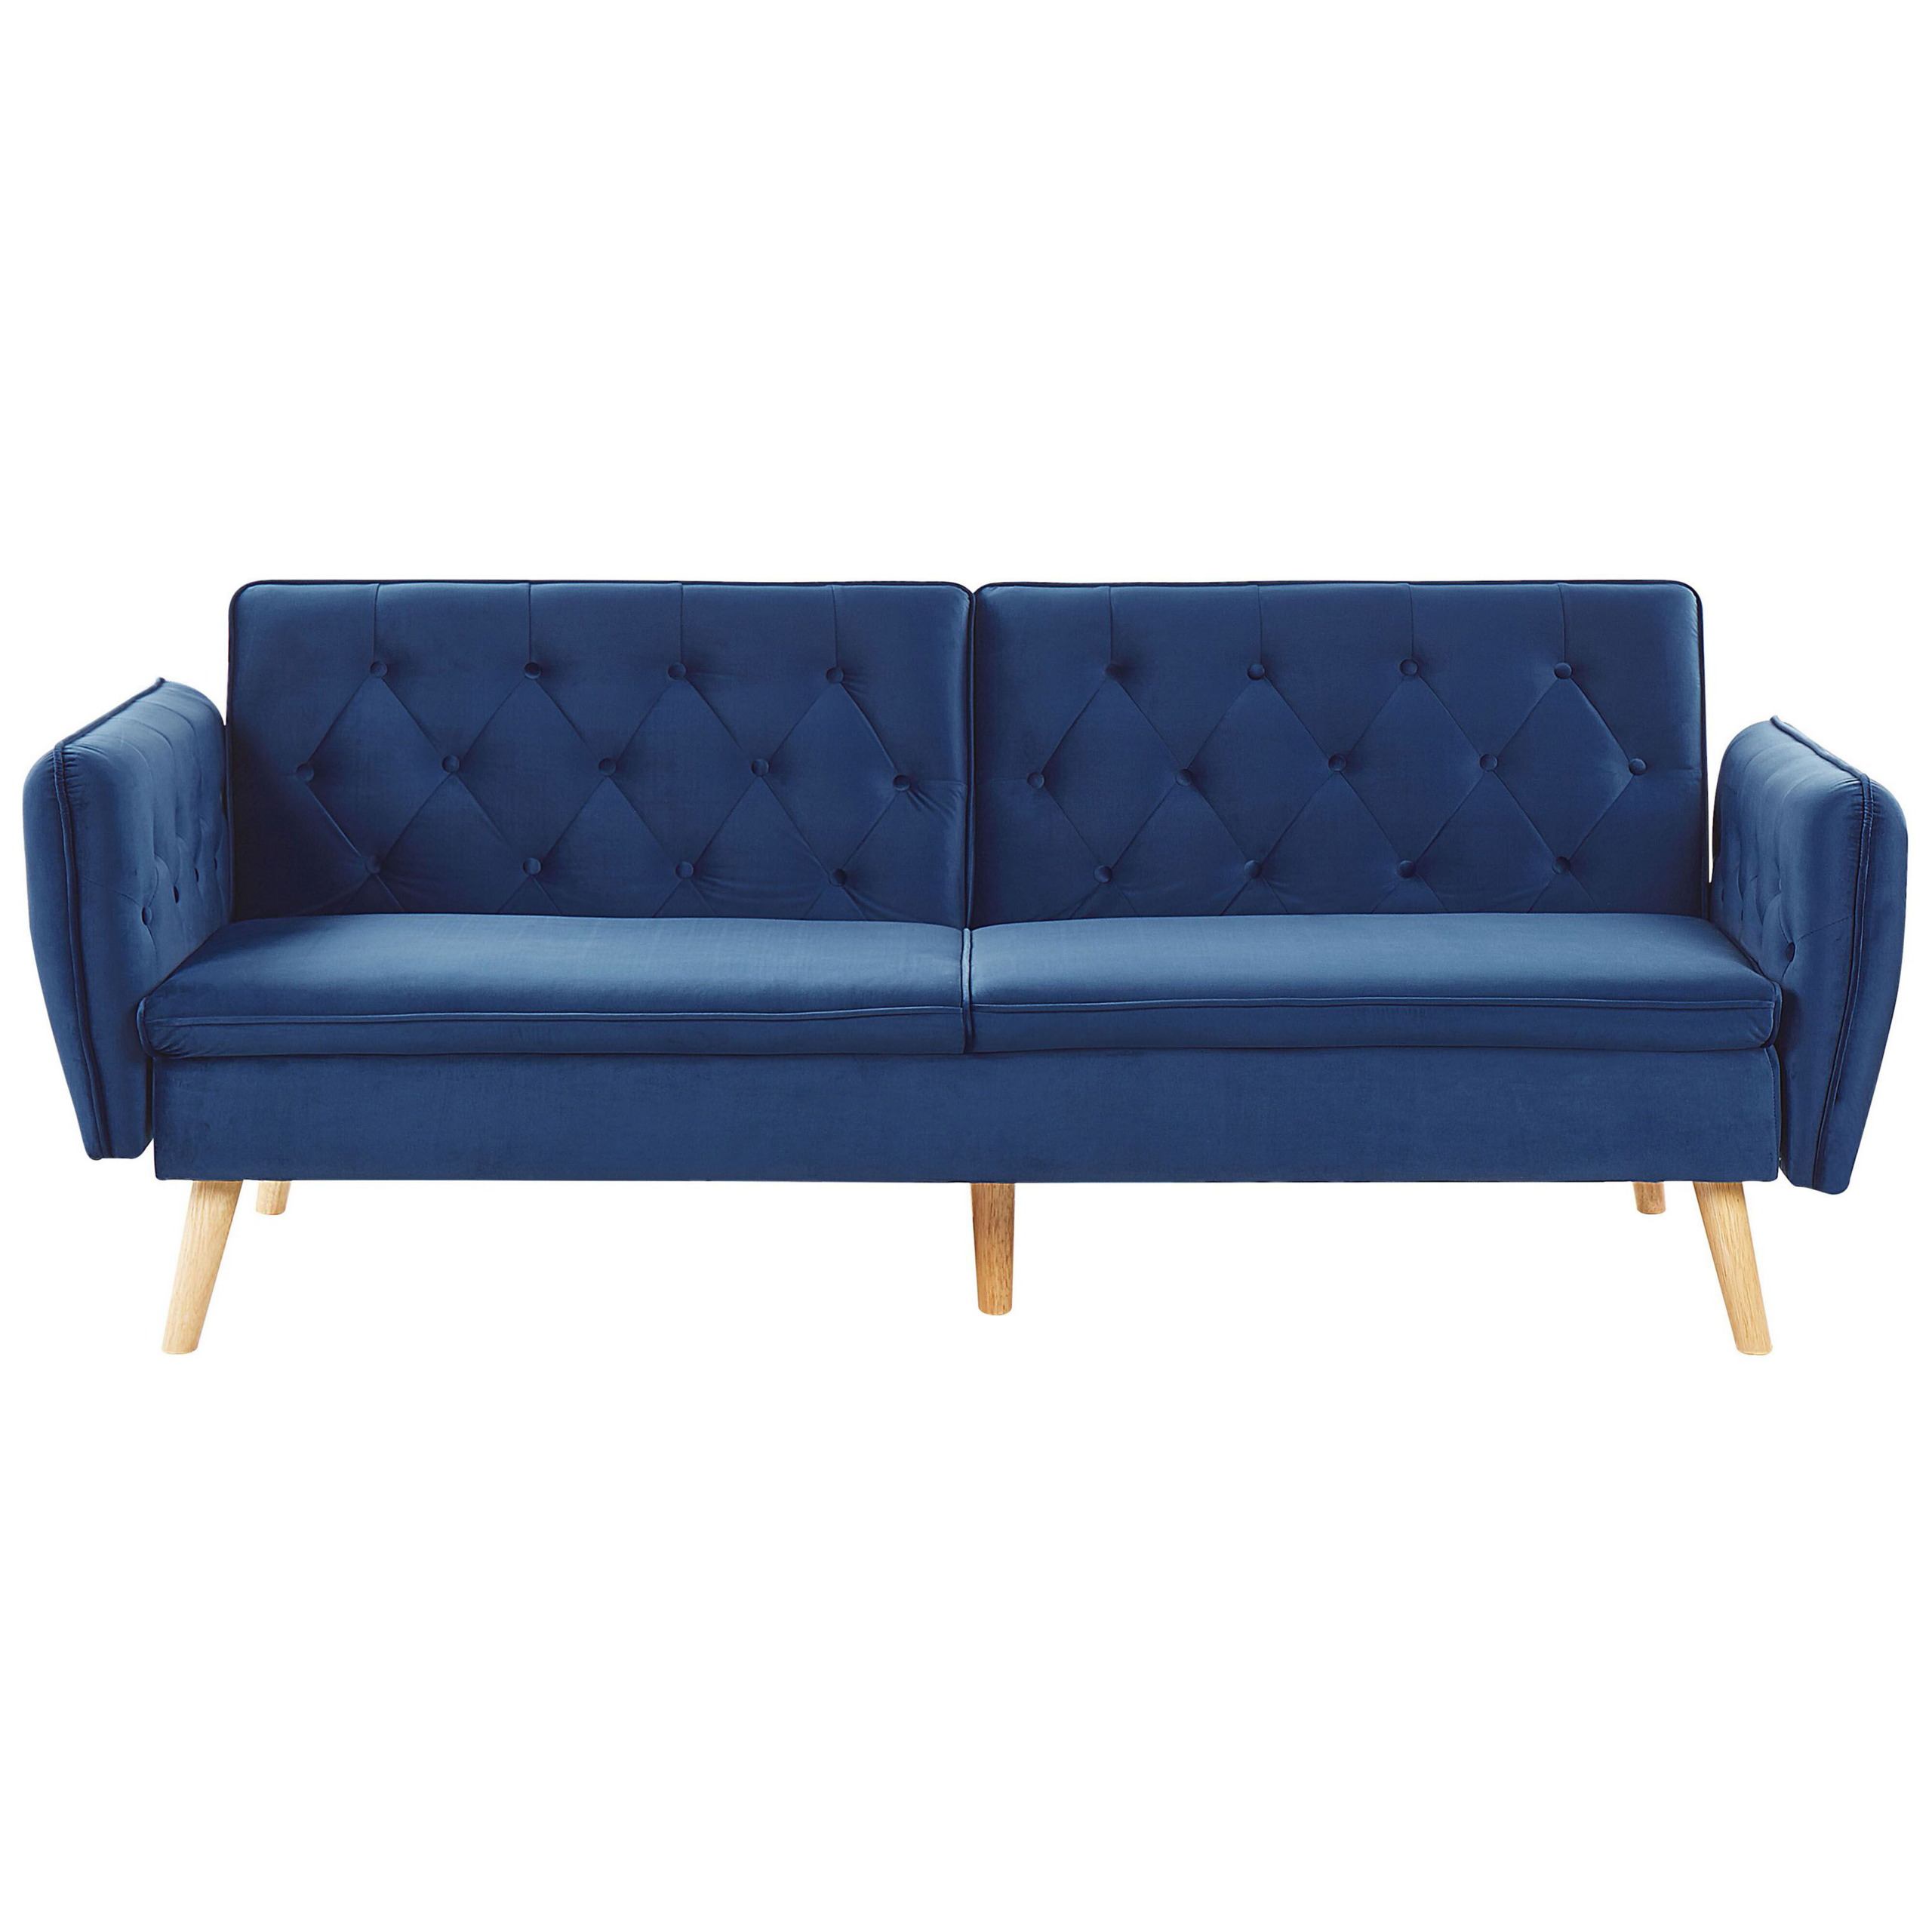 Beliani Sofa Bed Navy Blue Velvet Upholstered Convertible Couch Modern Design Buttoned Backrest